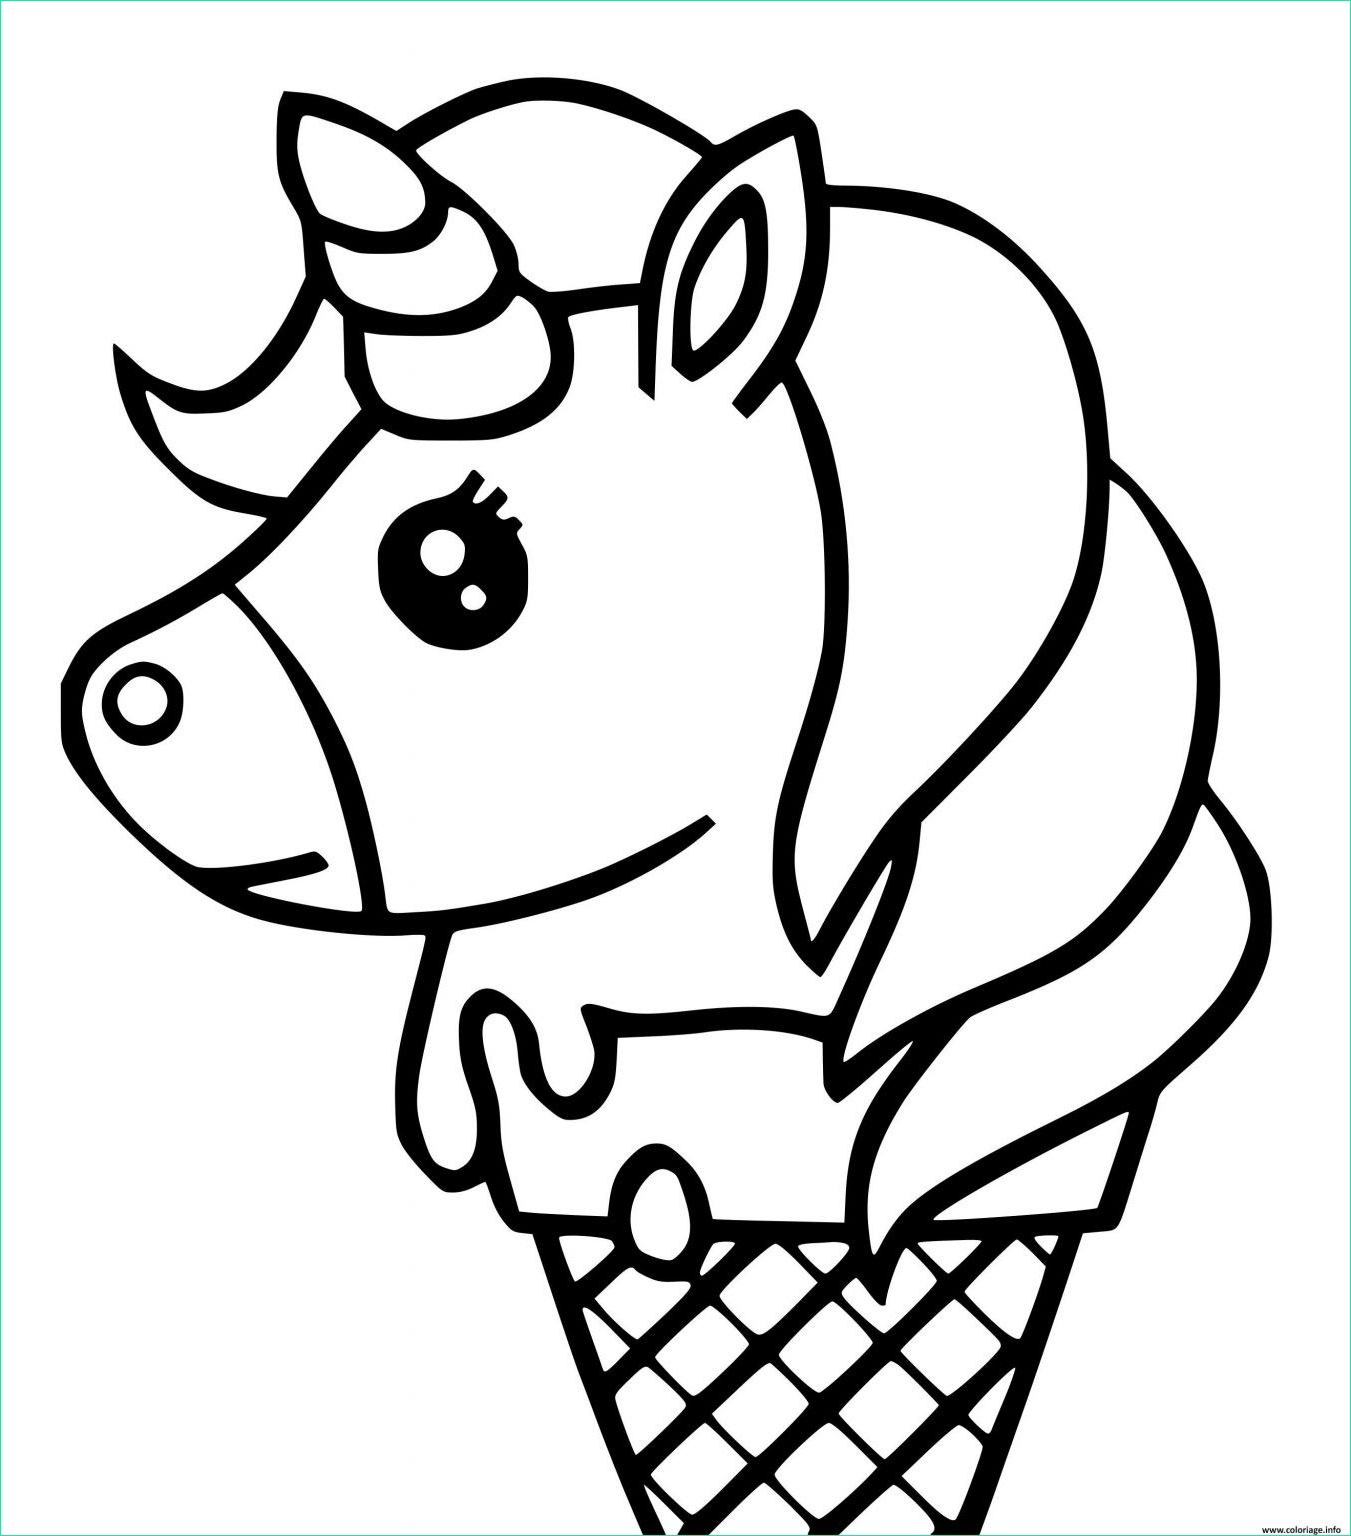 licorne kawaii a colorier beau image coloriage licorne cornet creme glacee kawaii dessin